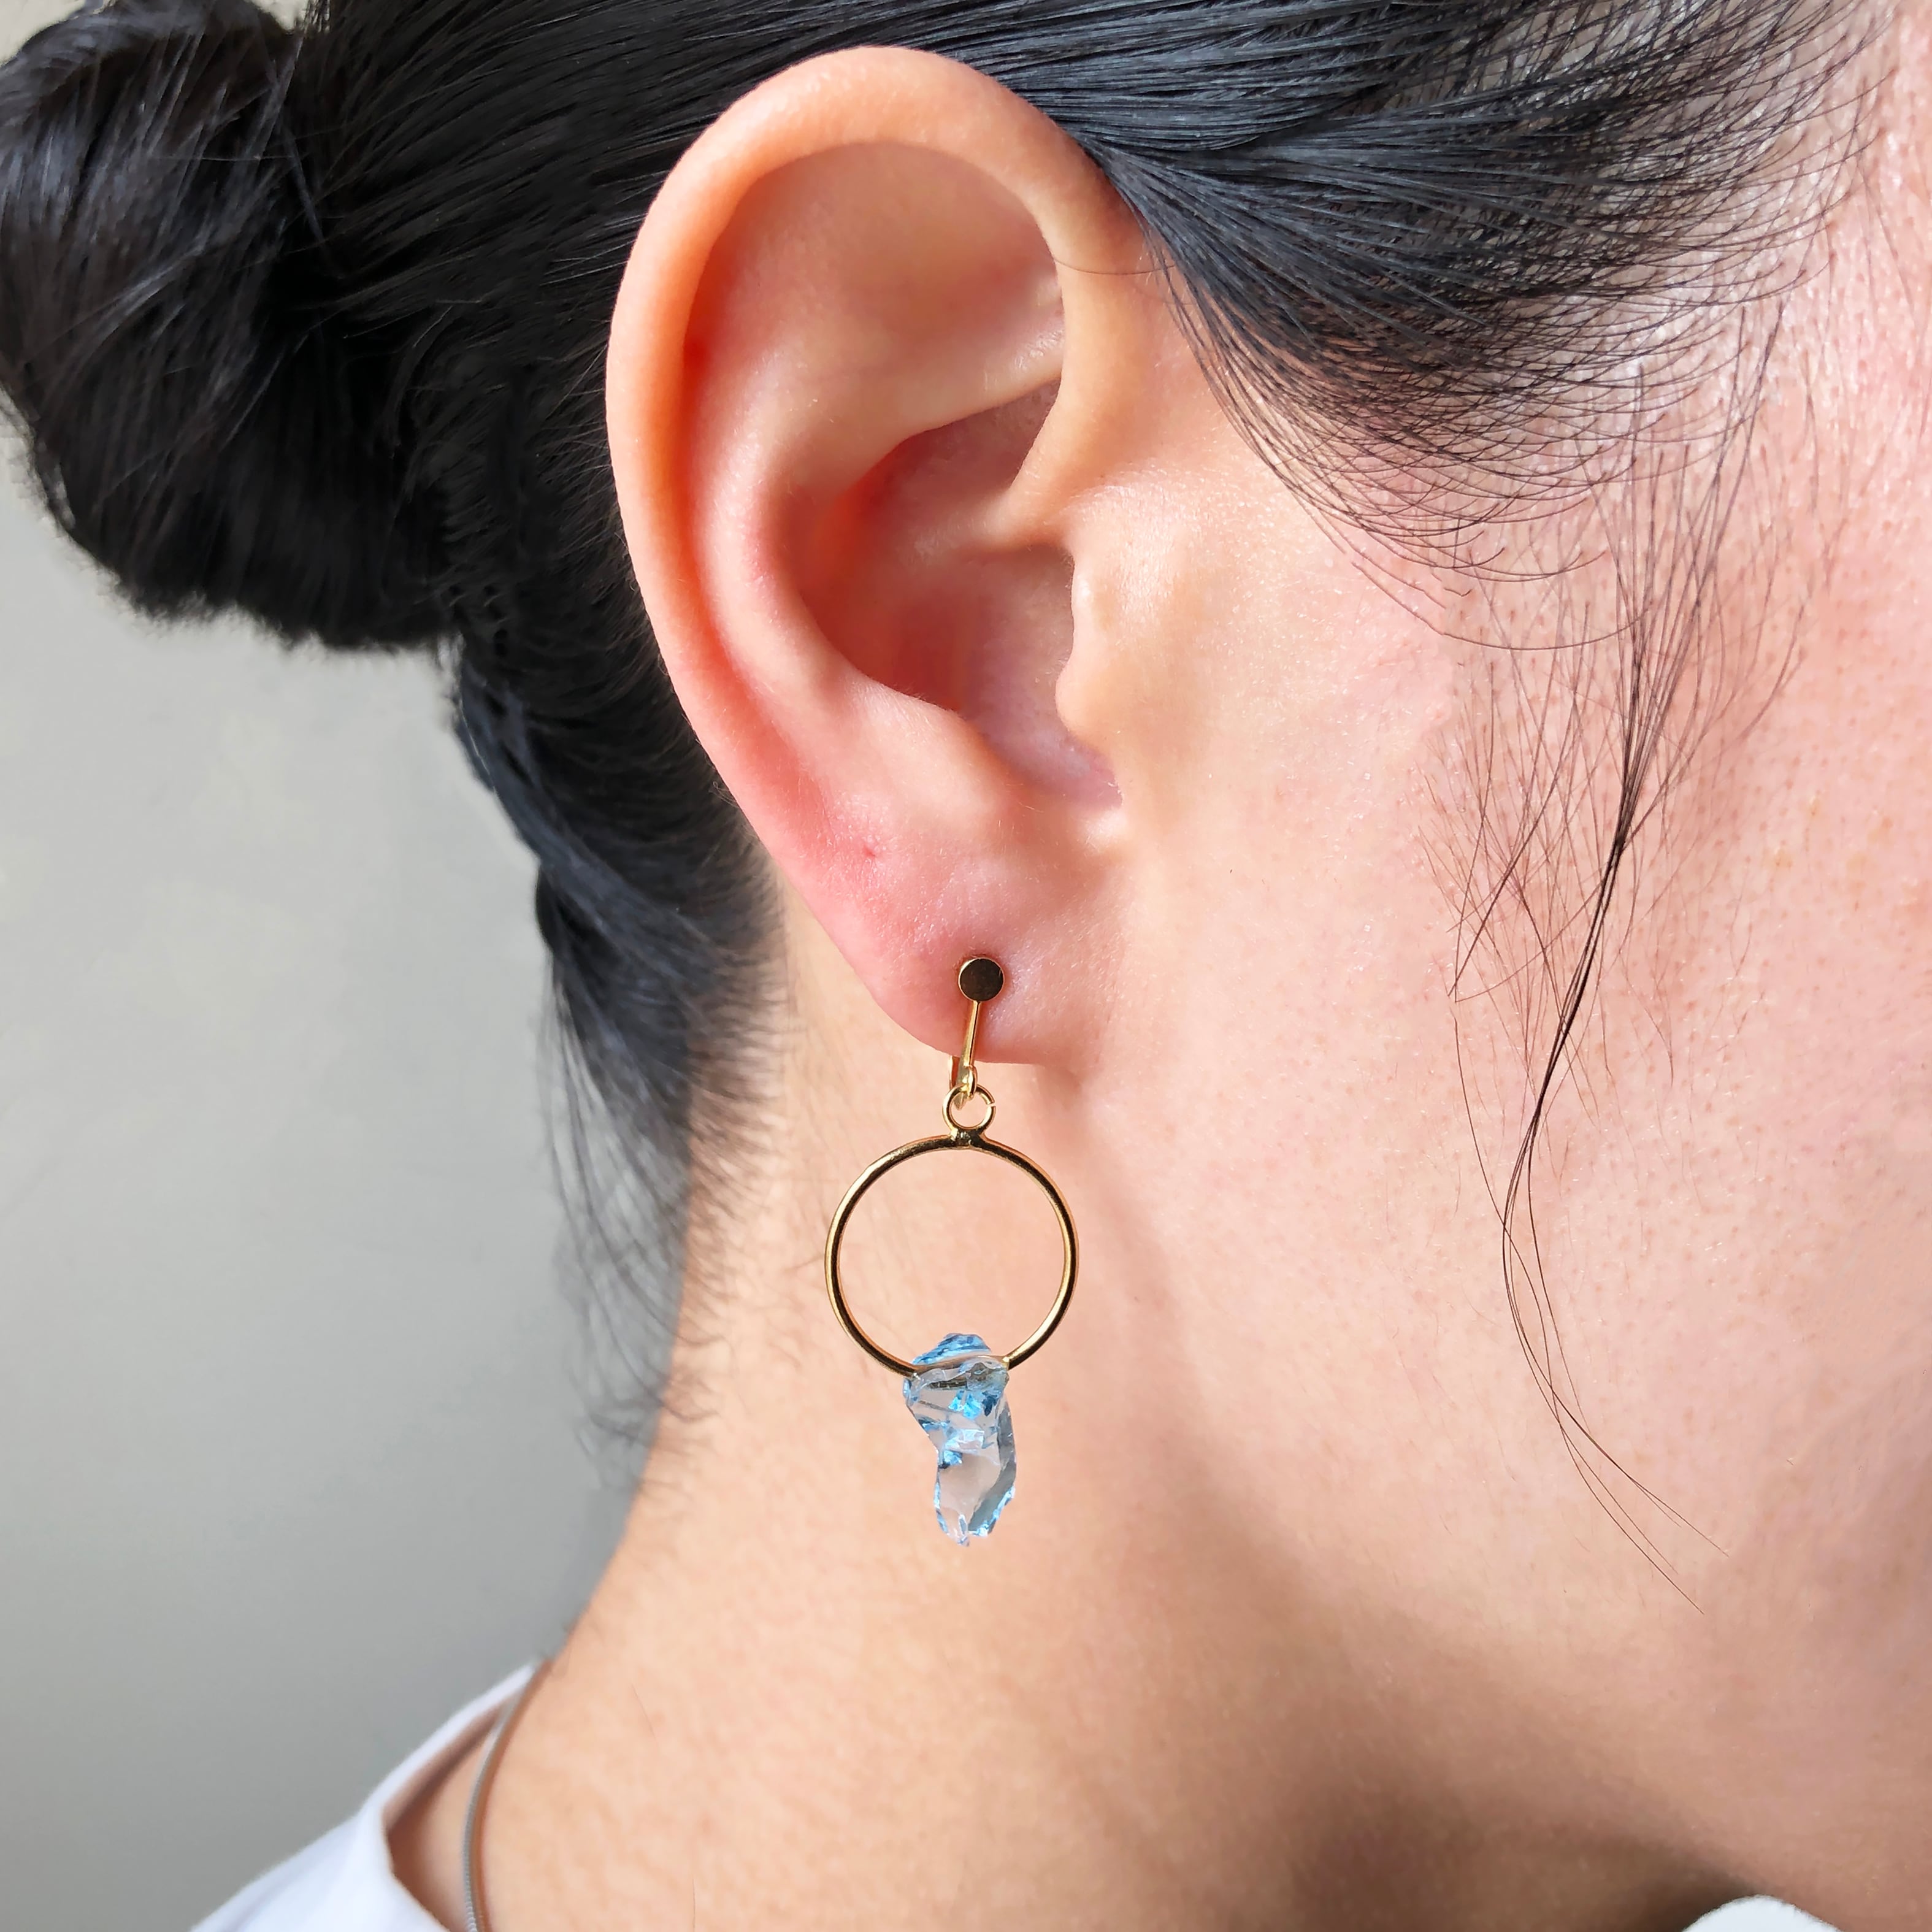 【ONLINE shop限定】FRAGMENT earring 06